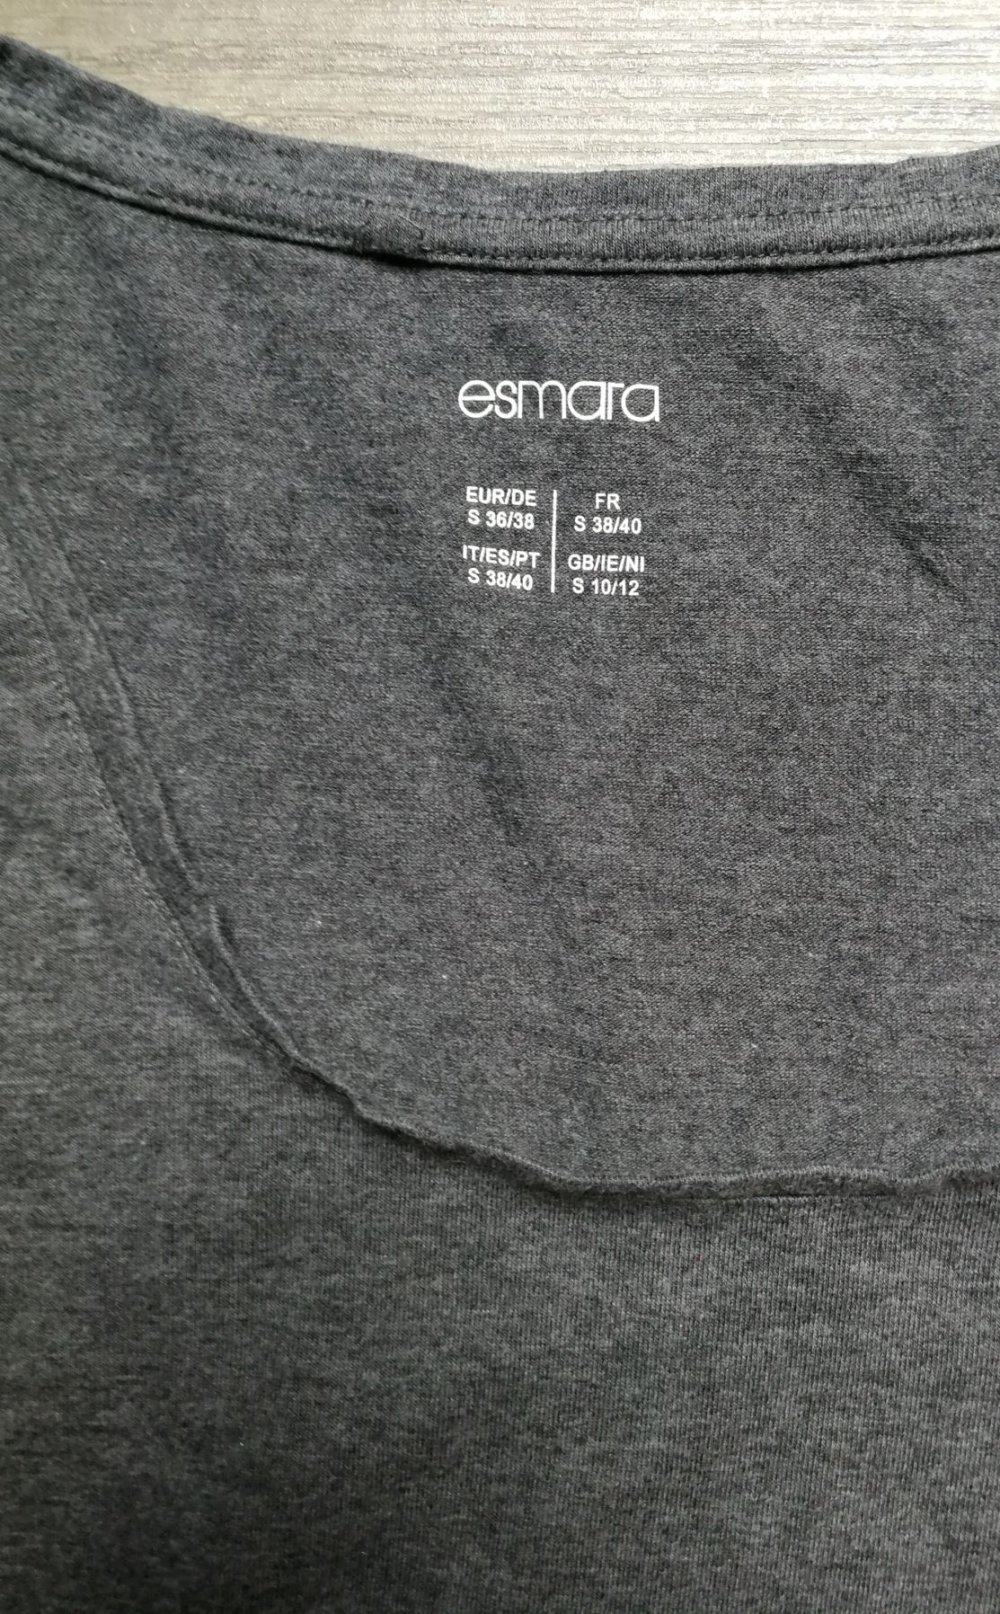 Longsleeve Langarm Shirt Minikleid Esmara Basic Grau 36/38 Leggingsshirt Langes Shirt Stretch